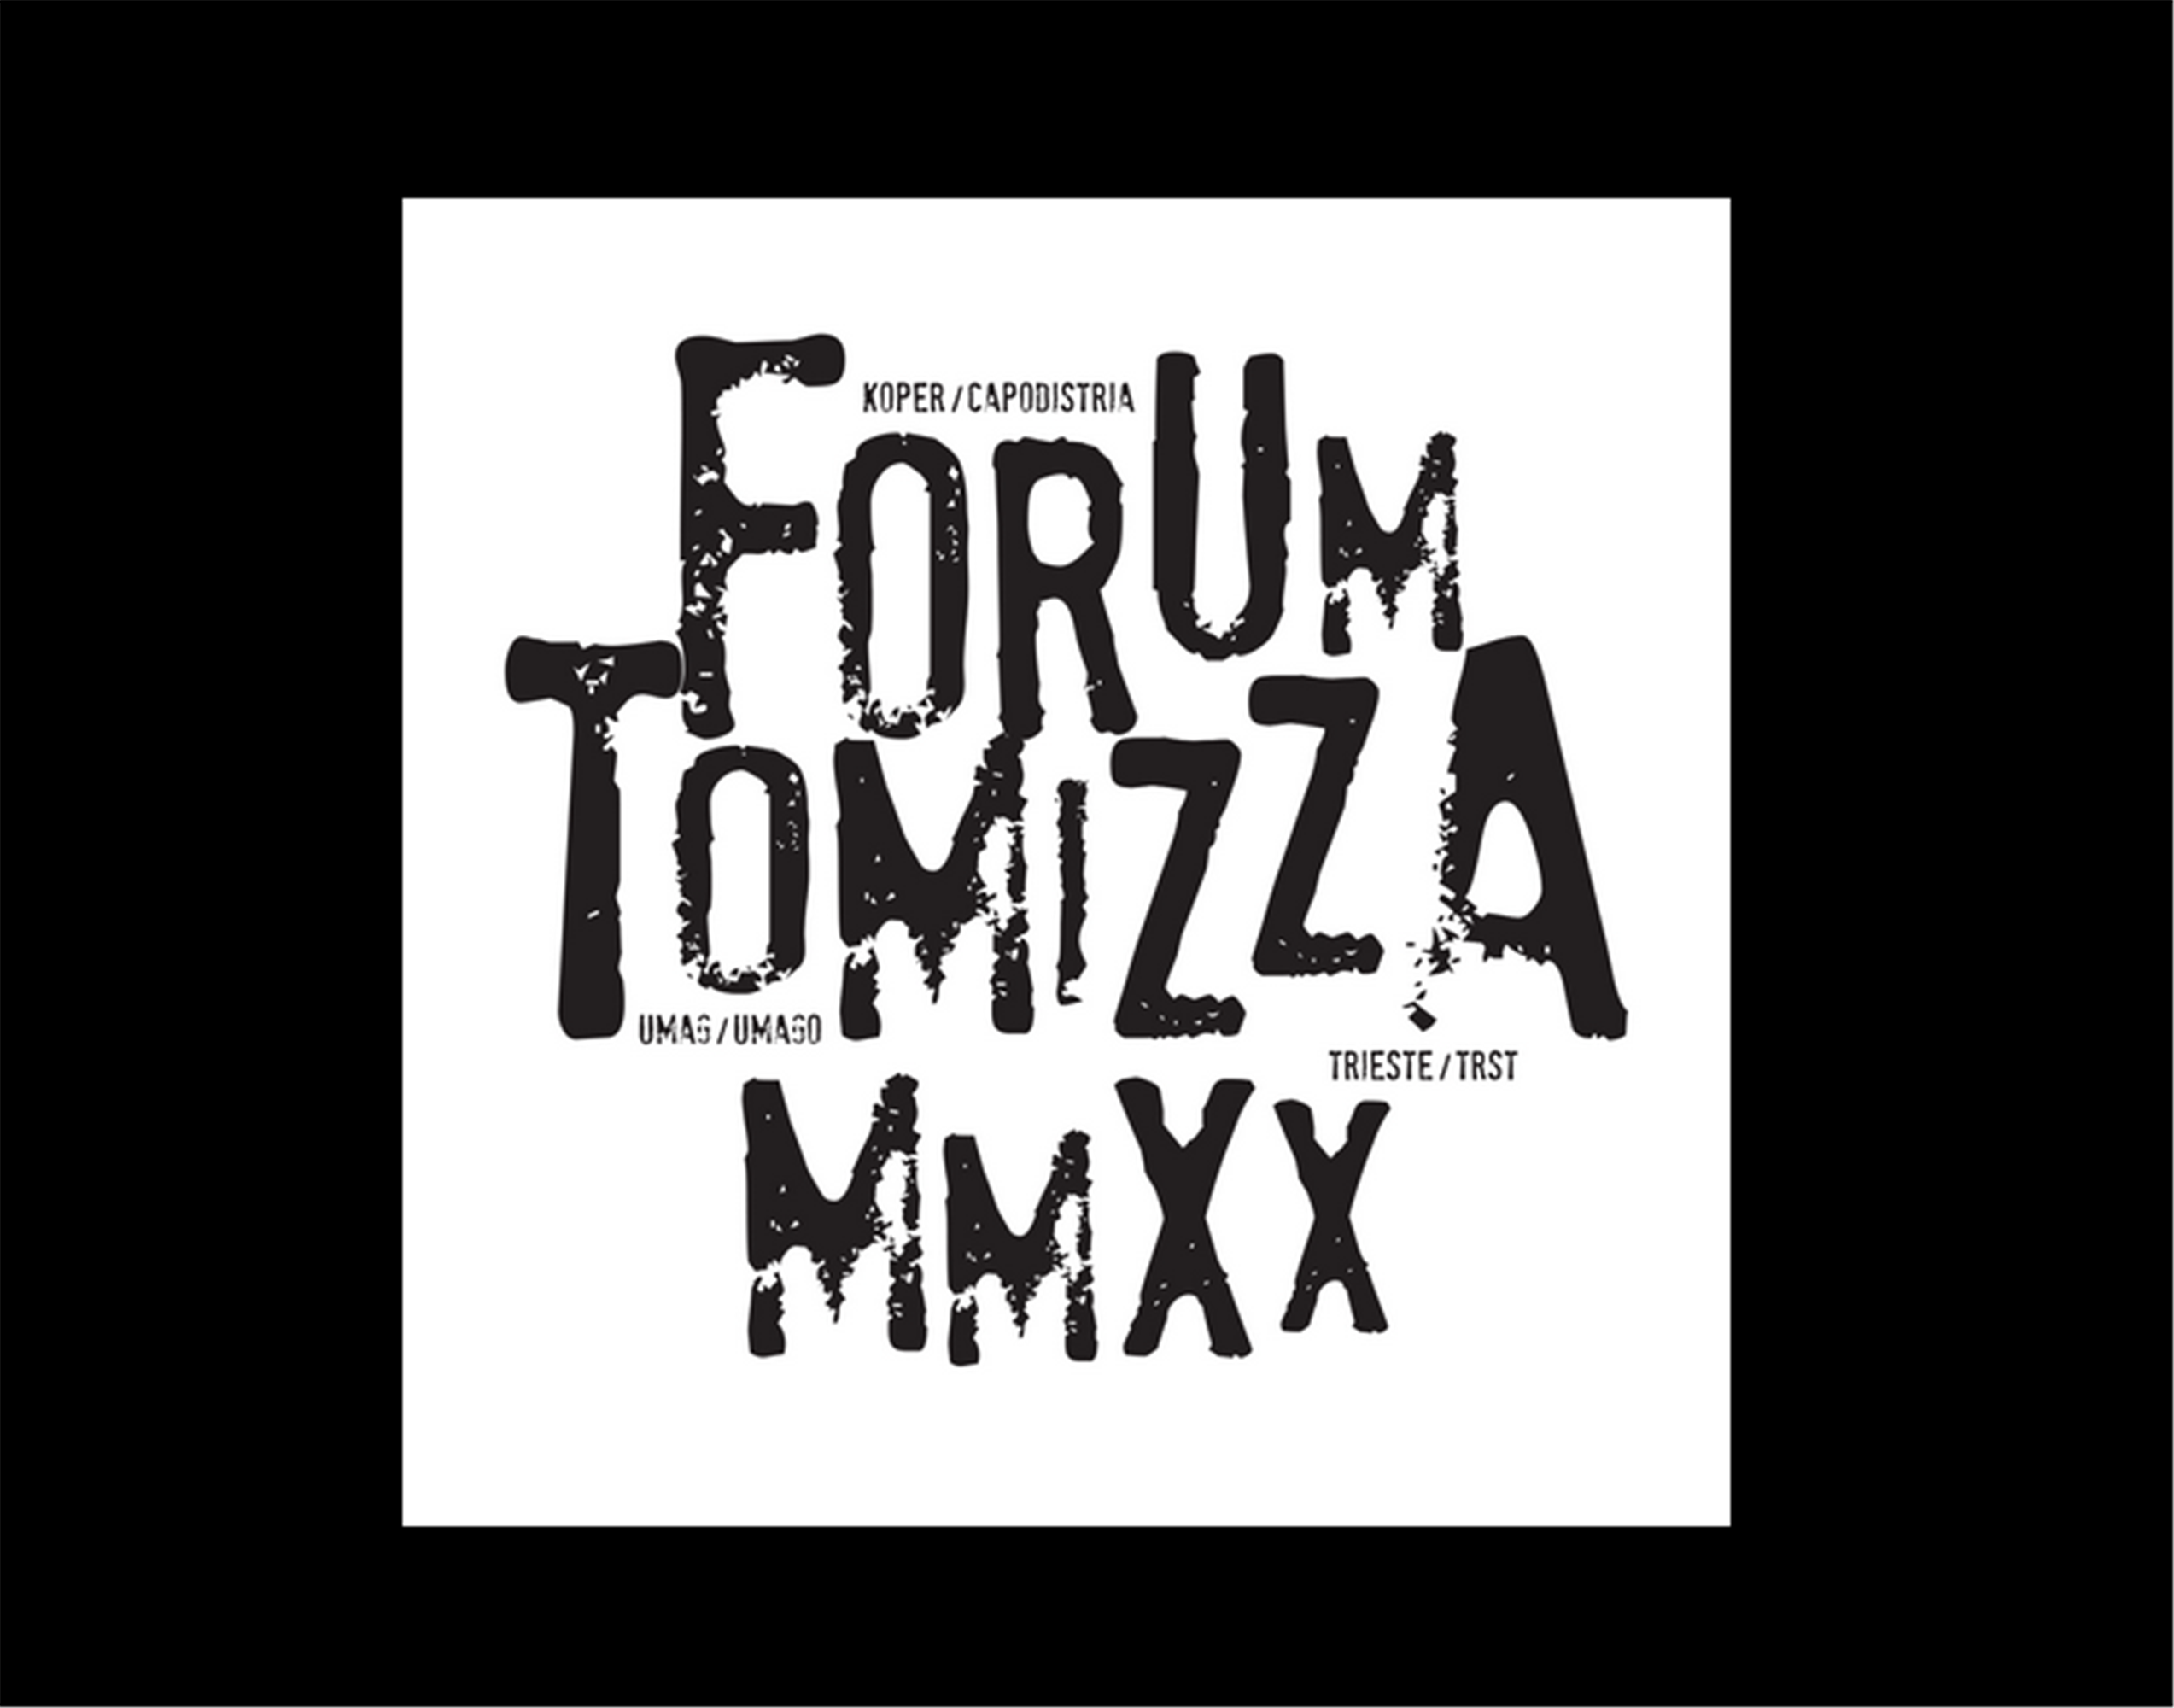 Forum Tomizza online!